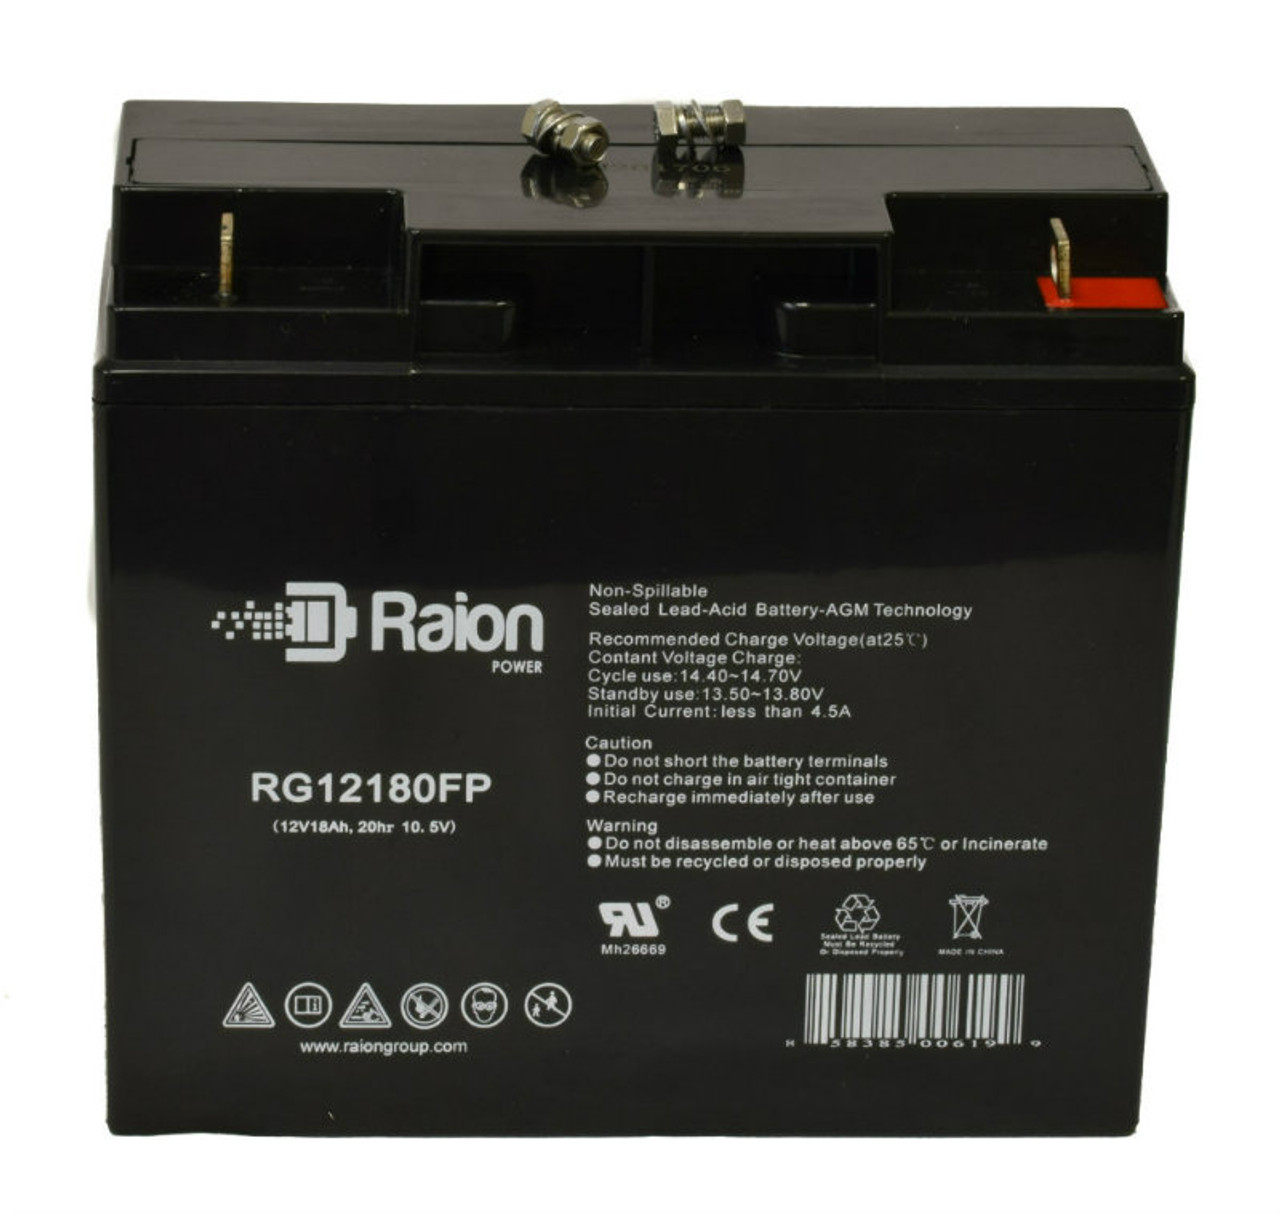 Raion Power RG12180FP 12V 18Ah Lead Acid Battery for Toyo Battery 6FM18